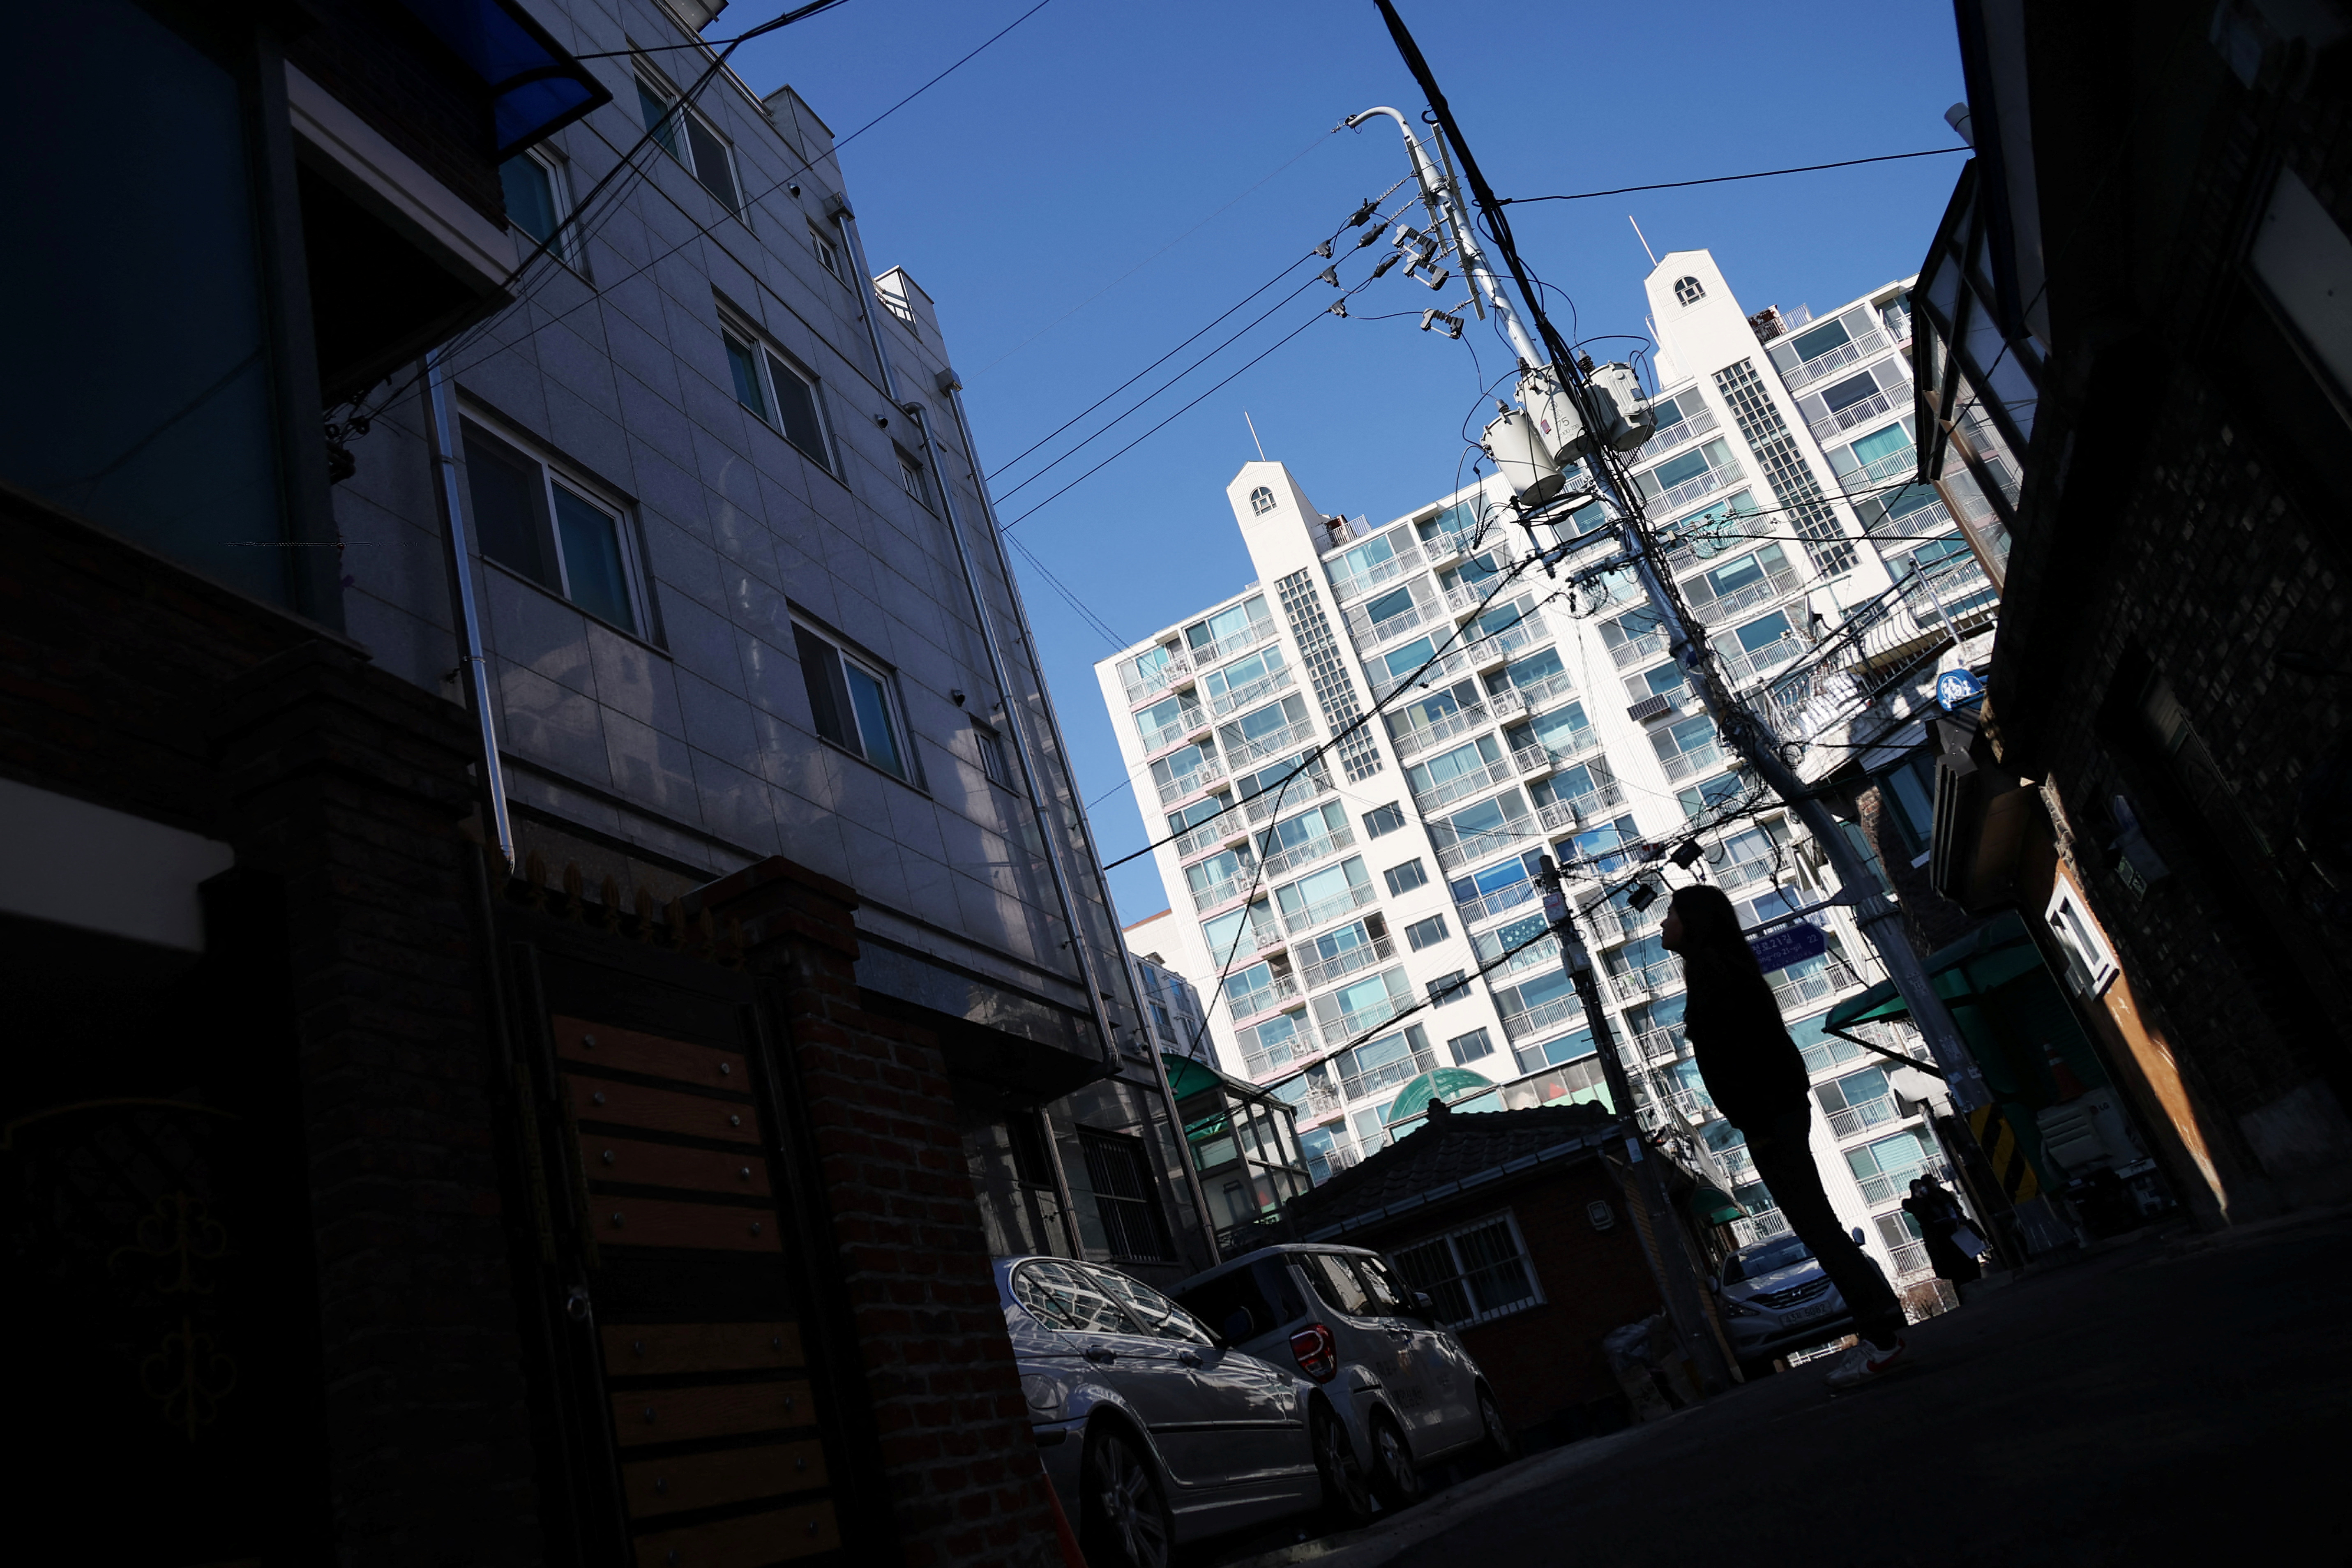 South Korea's 'jeonse' rent-free renters hit by property downturn